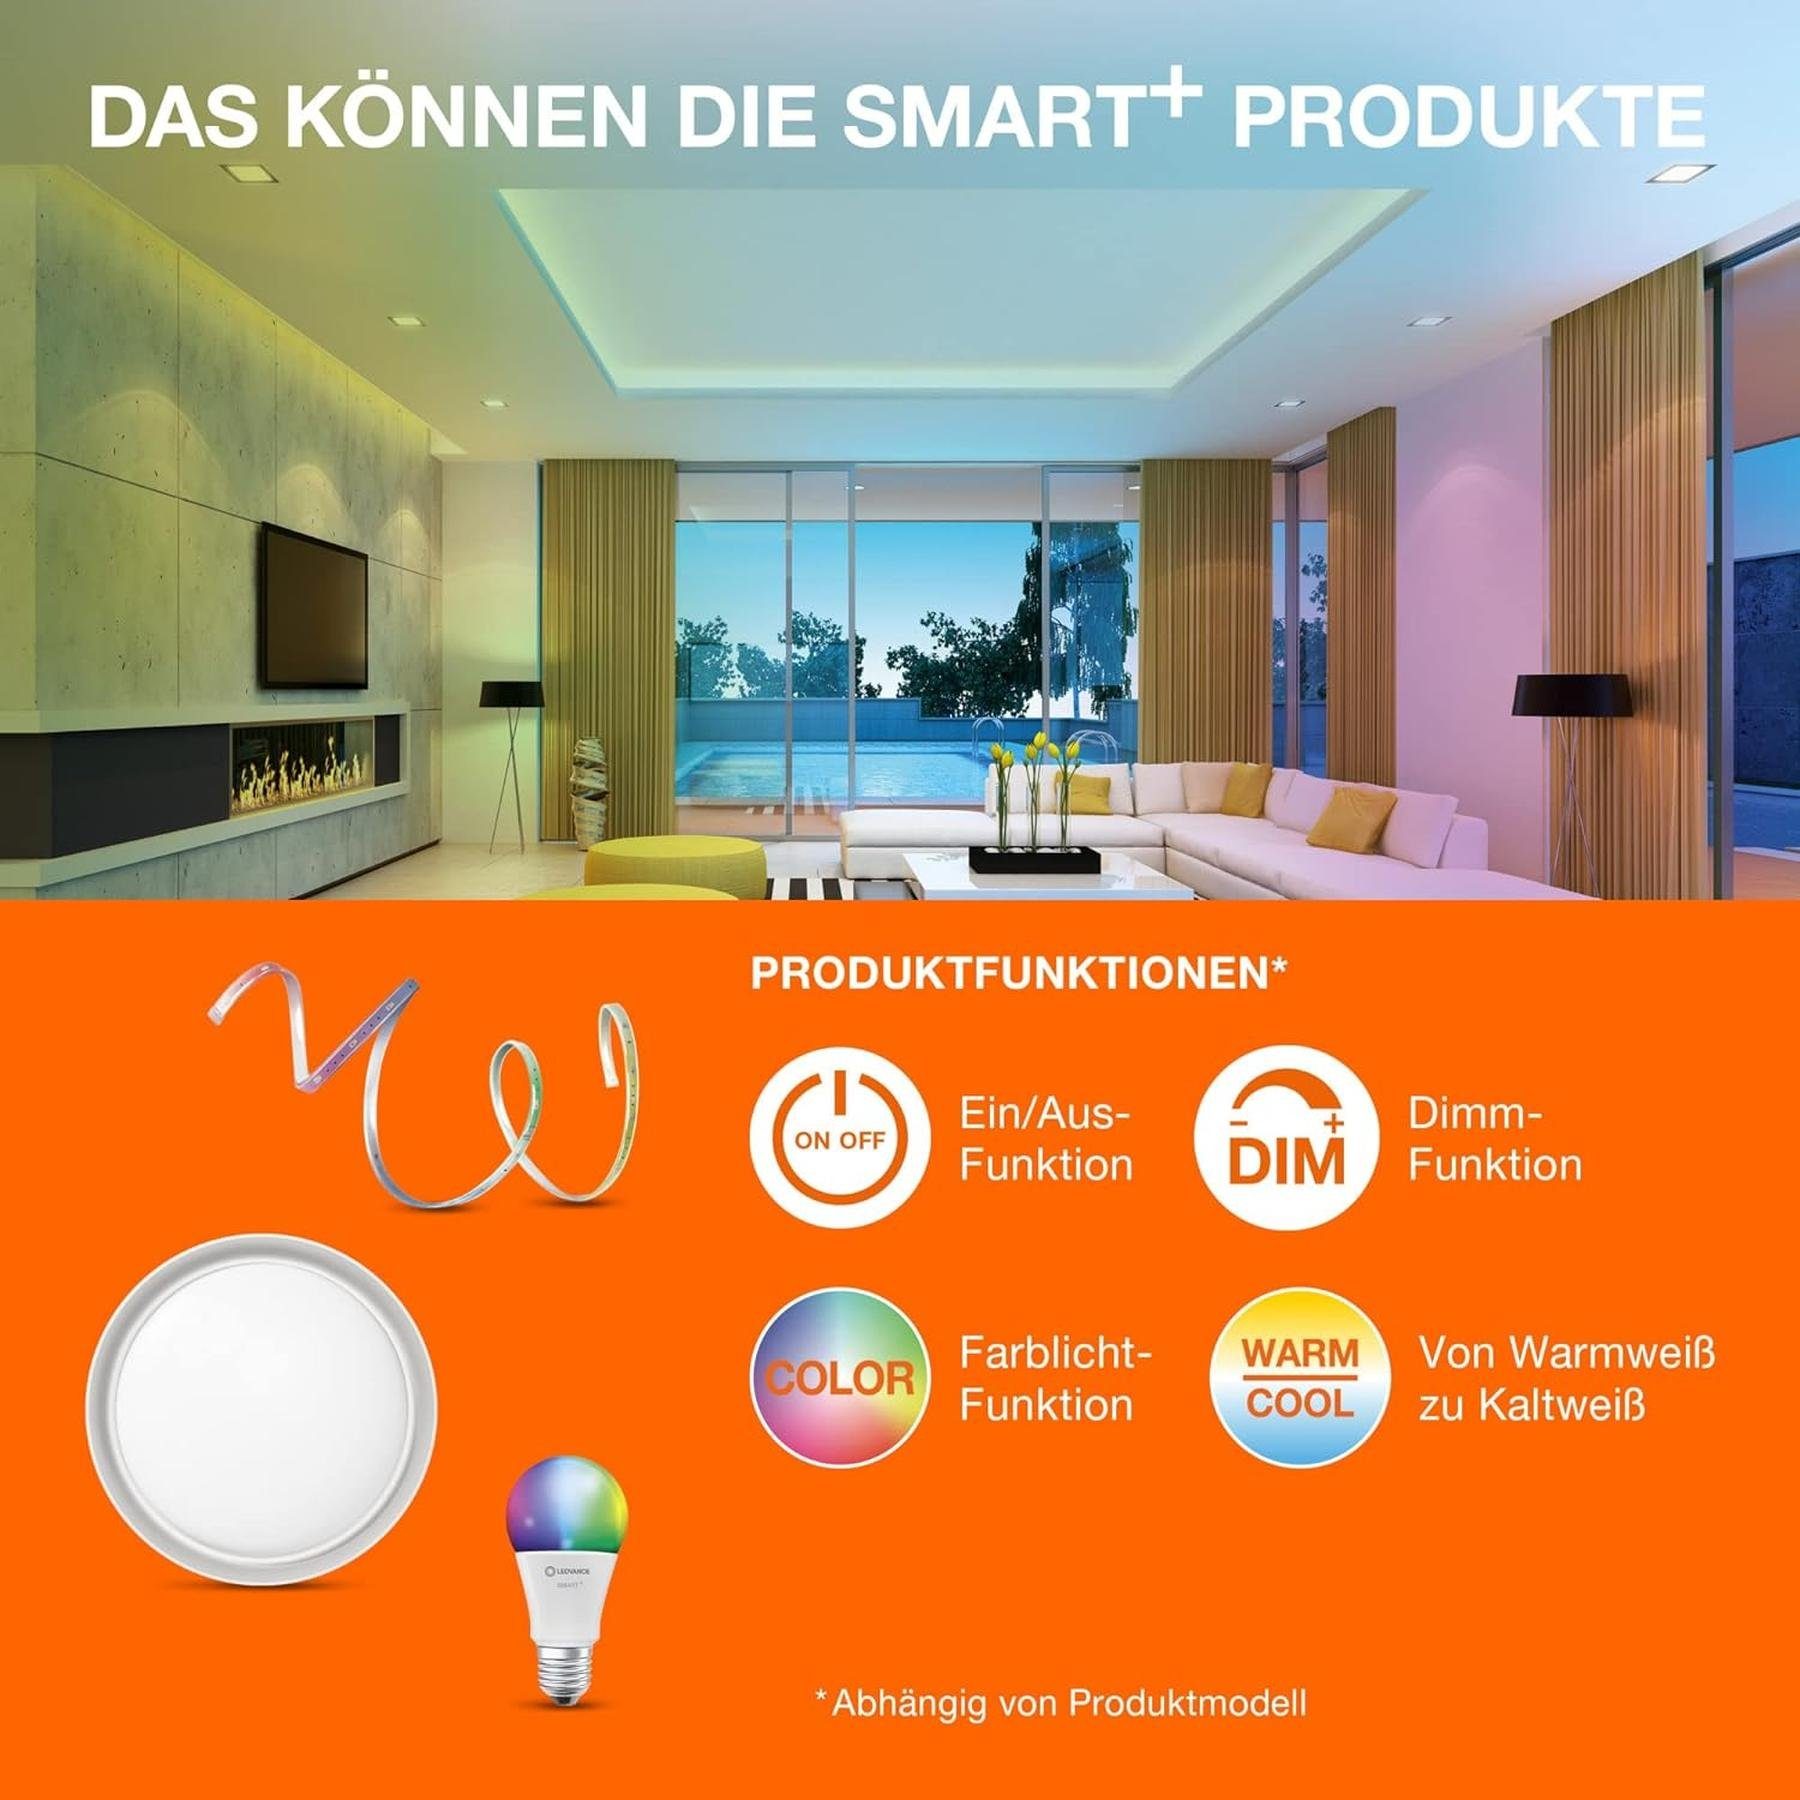 mini LED-Leuchtmittel Lampe warmweiß E27, Glühbirne Ledvance 4W, Dimmbar, Wifi App-Steuerung Warmweiss, Tropfenform Energiesparend, E27 Smart